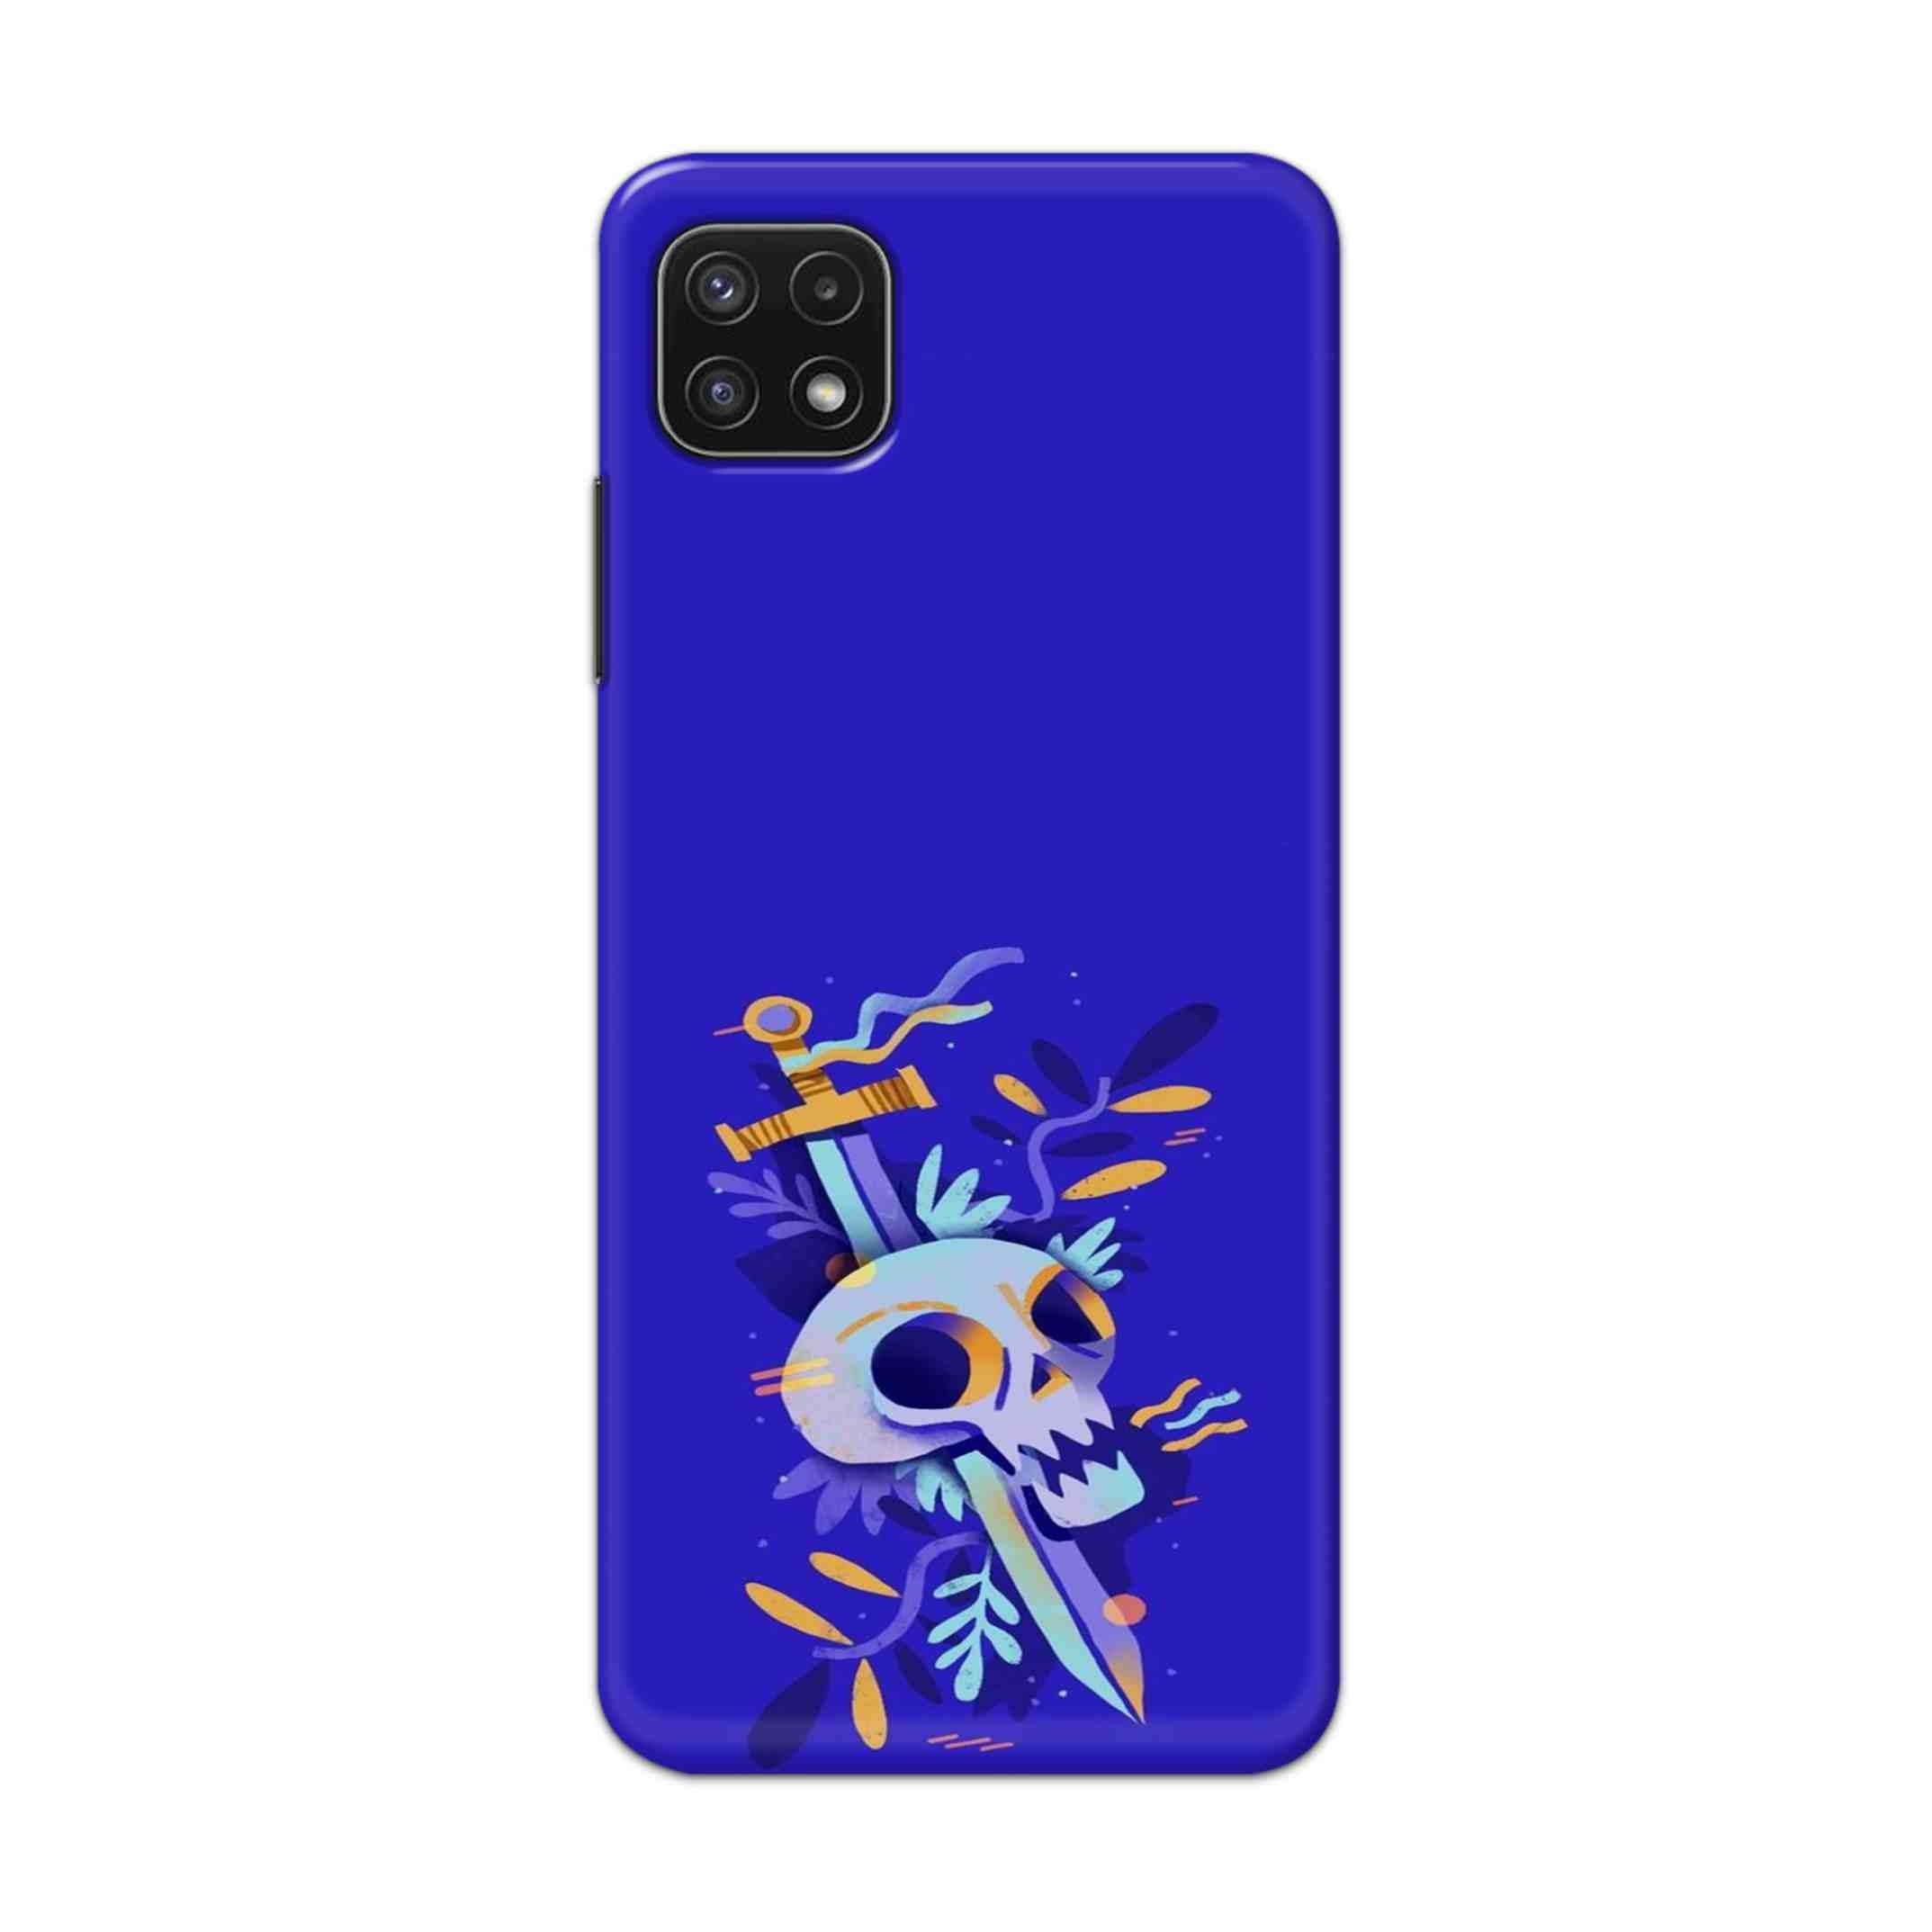 Buy Blue Skull Hard Back Mobile Phone Case Cover For Samsung A22 5G Online